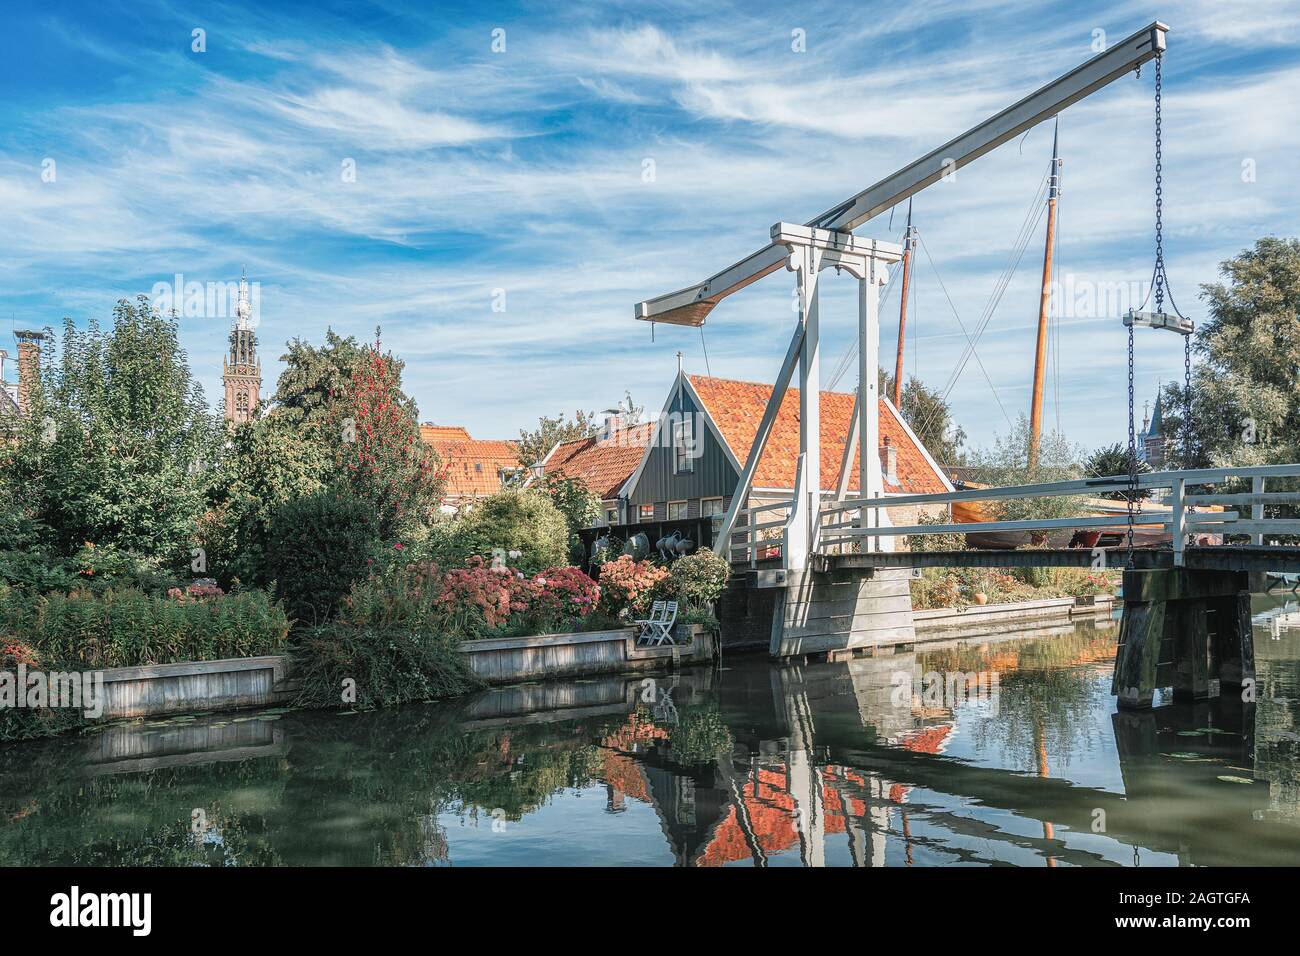 The Kwakelbrug bridge over the Nieuwe Haven canal in Edam in the Netherlands Stock Photo